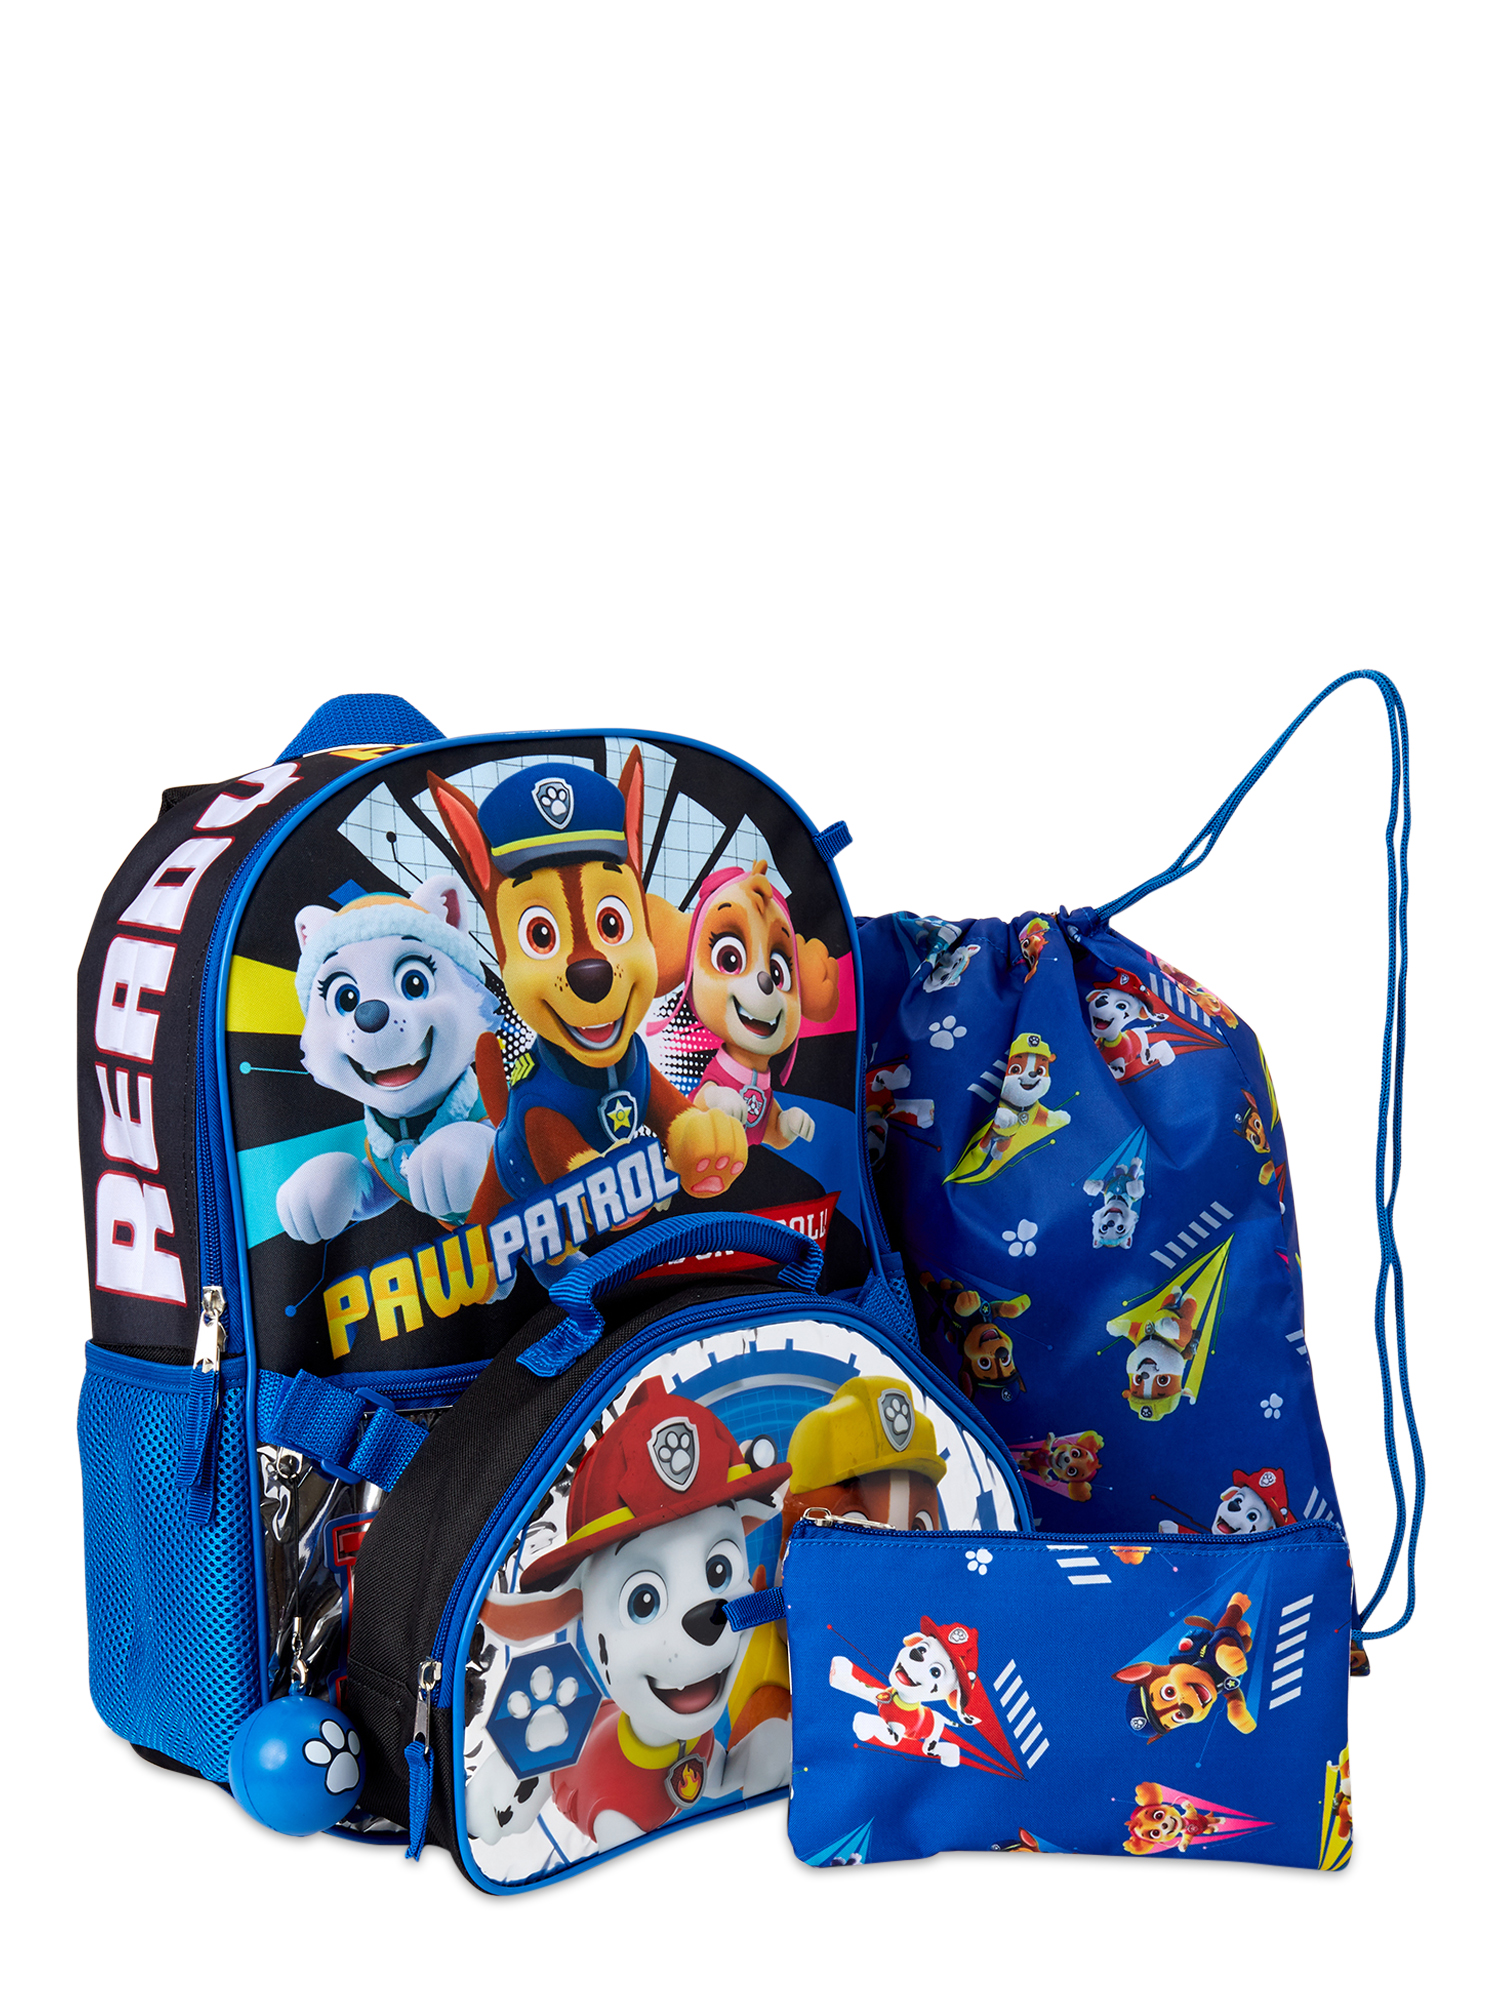 PAW Patrol School Book Bag and Drawstring Swimming Bag Set